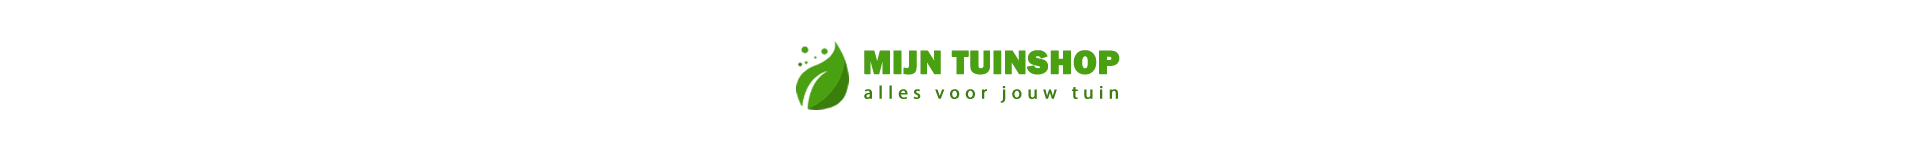 Mijn Tuinshop (NL)s achtergrond